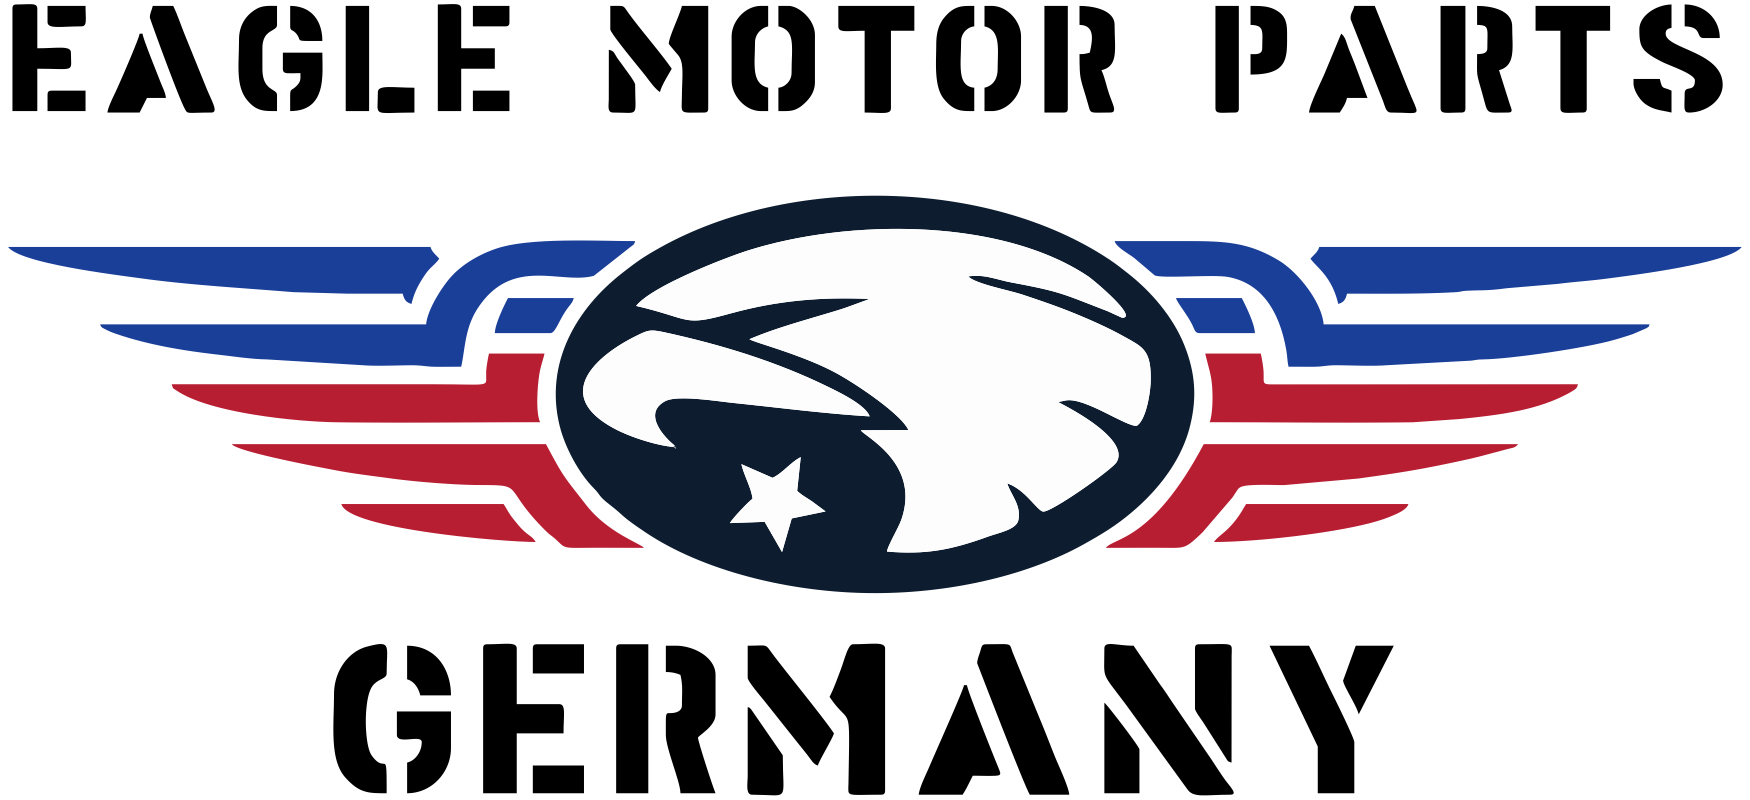 Eagle Motorparts Germany